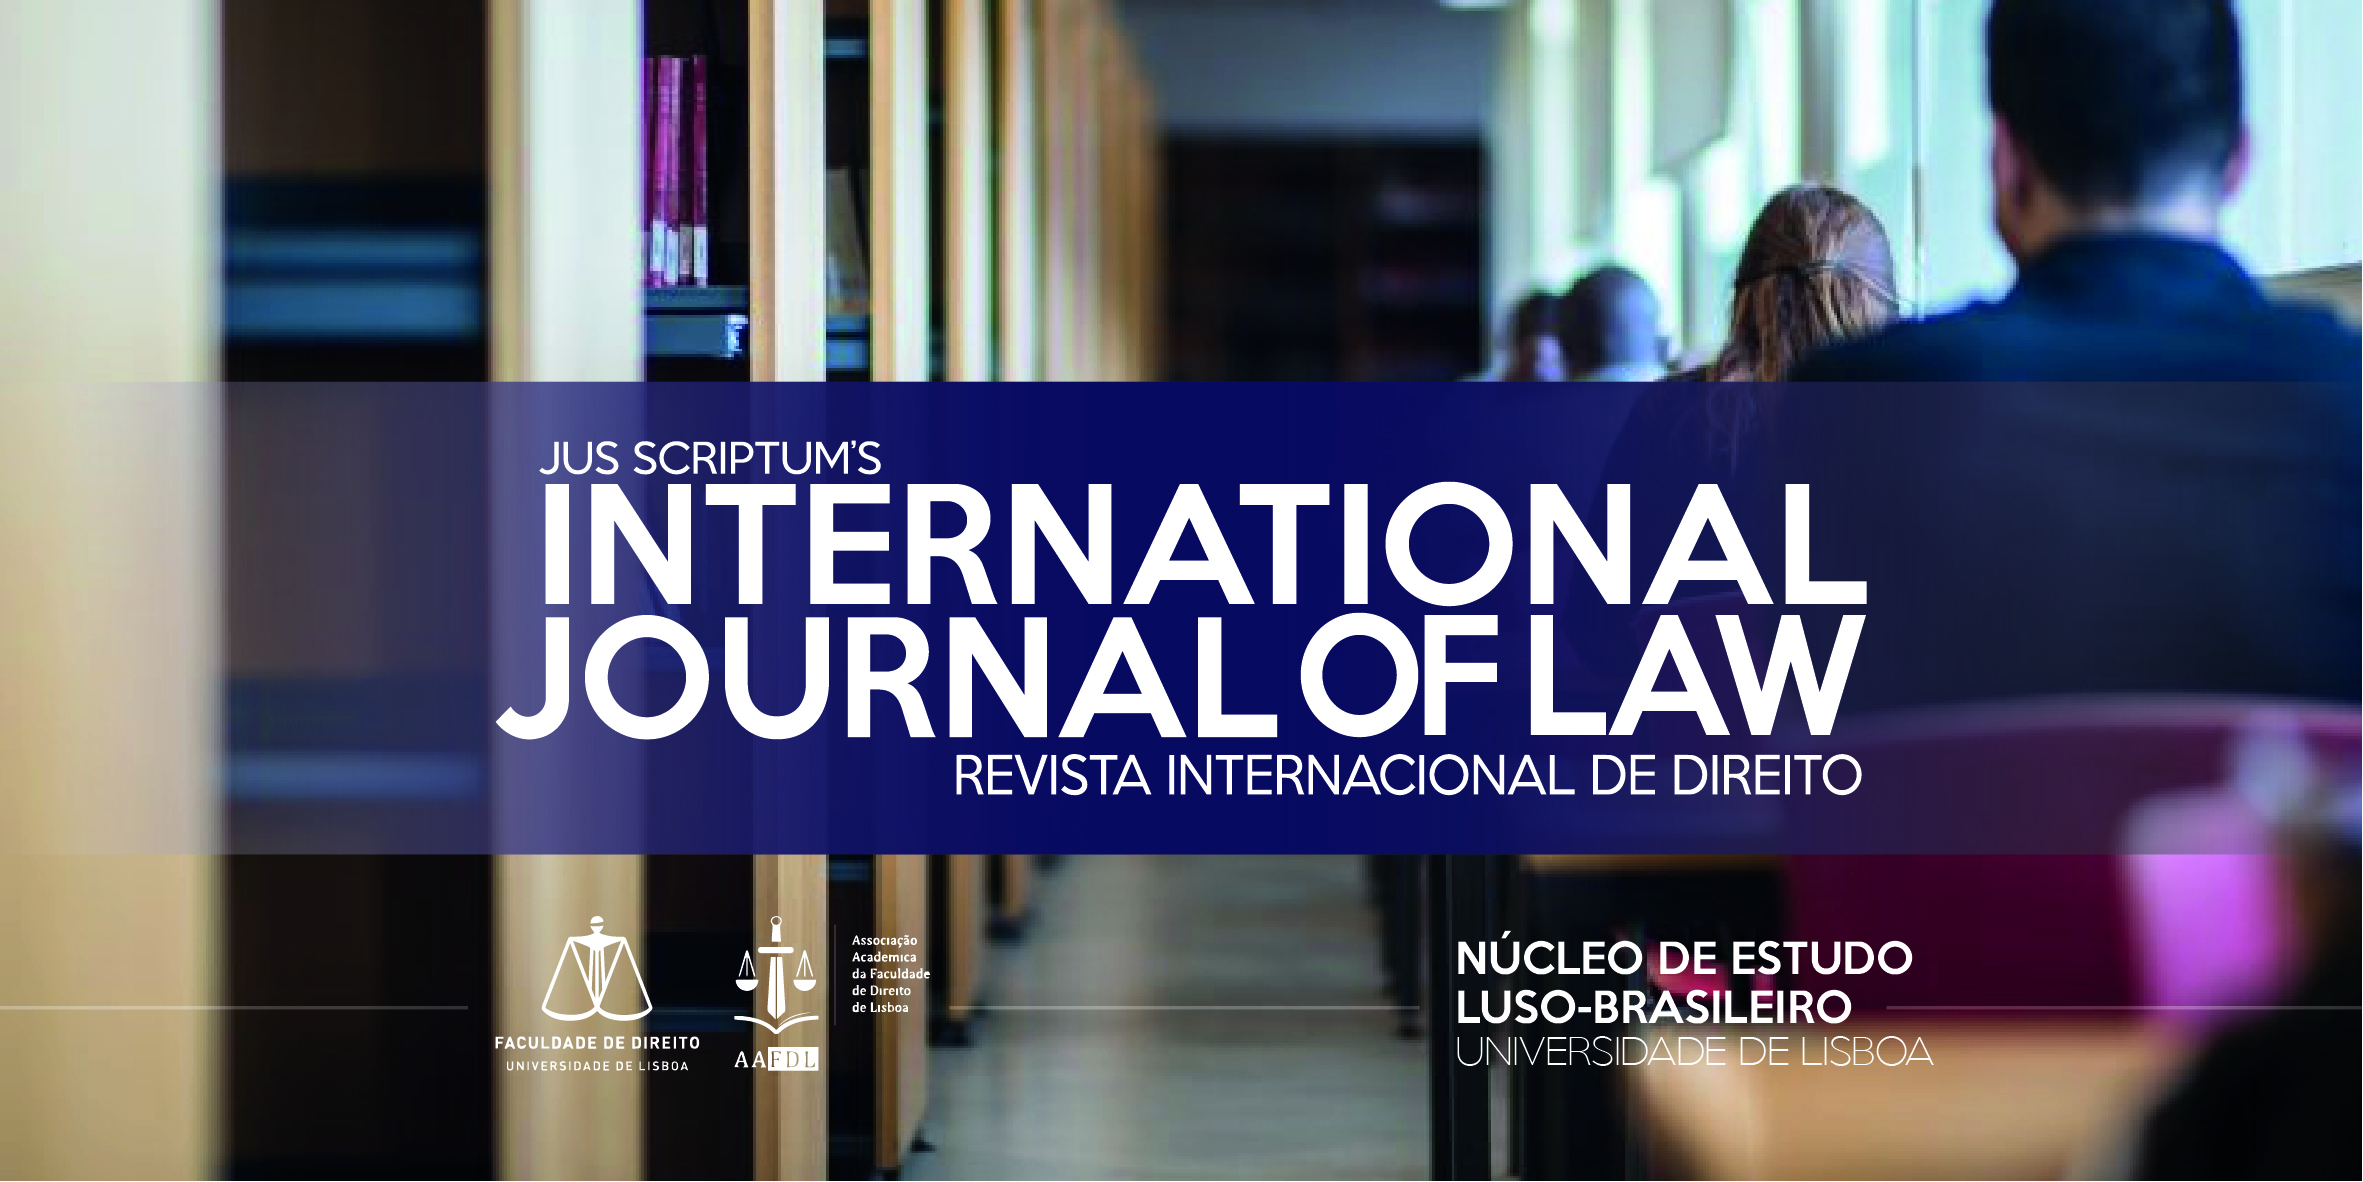 International Journal of Law